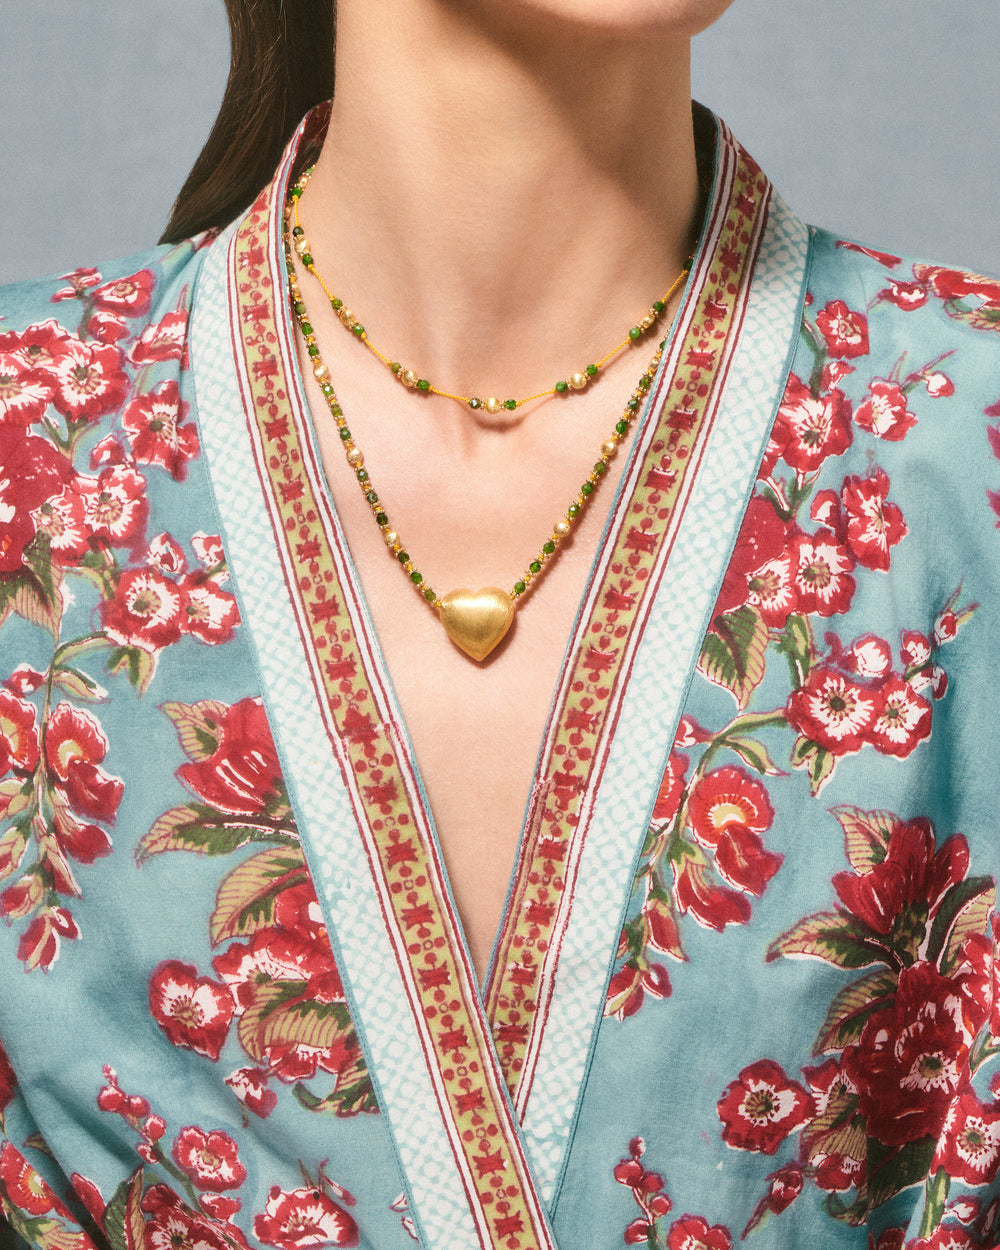 Samba necklace